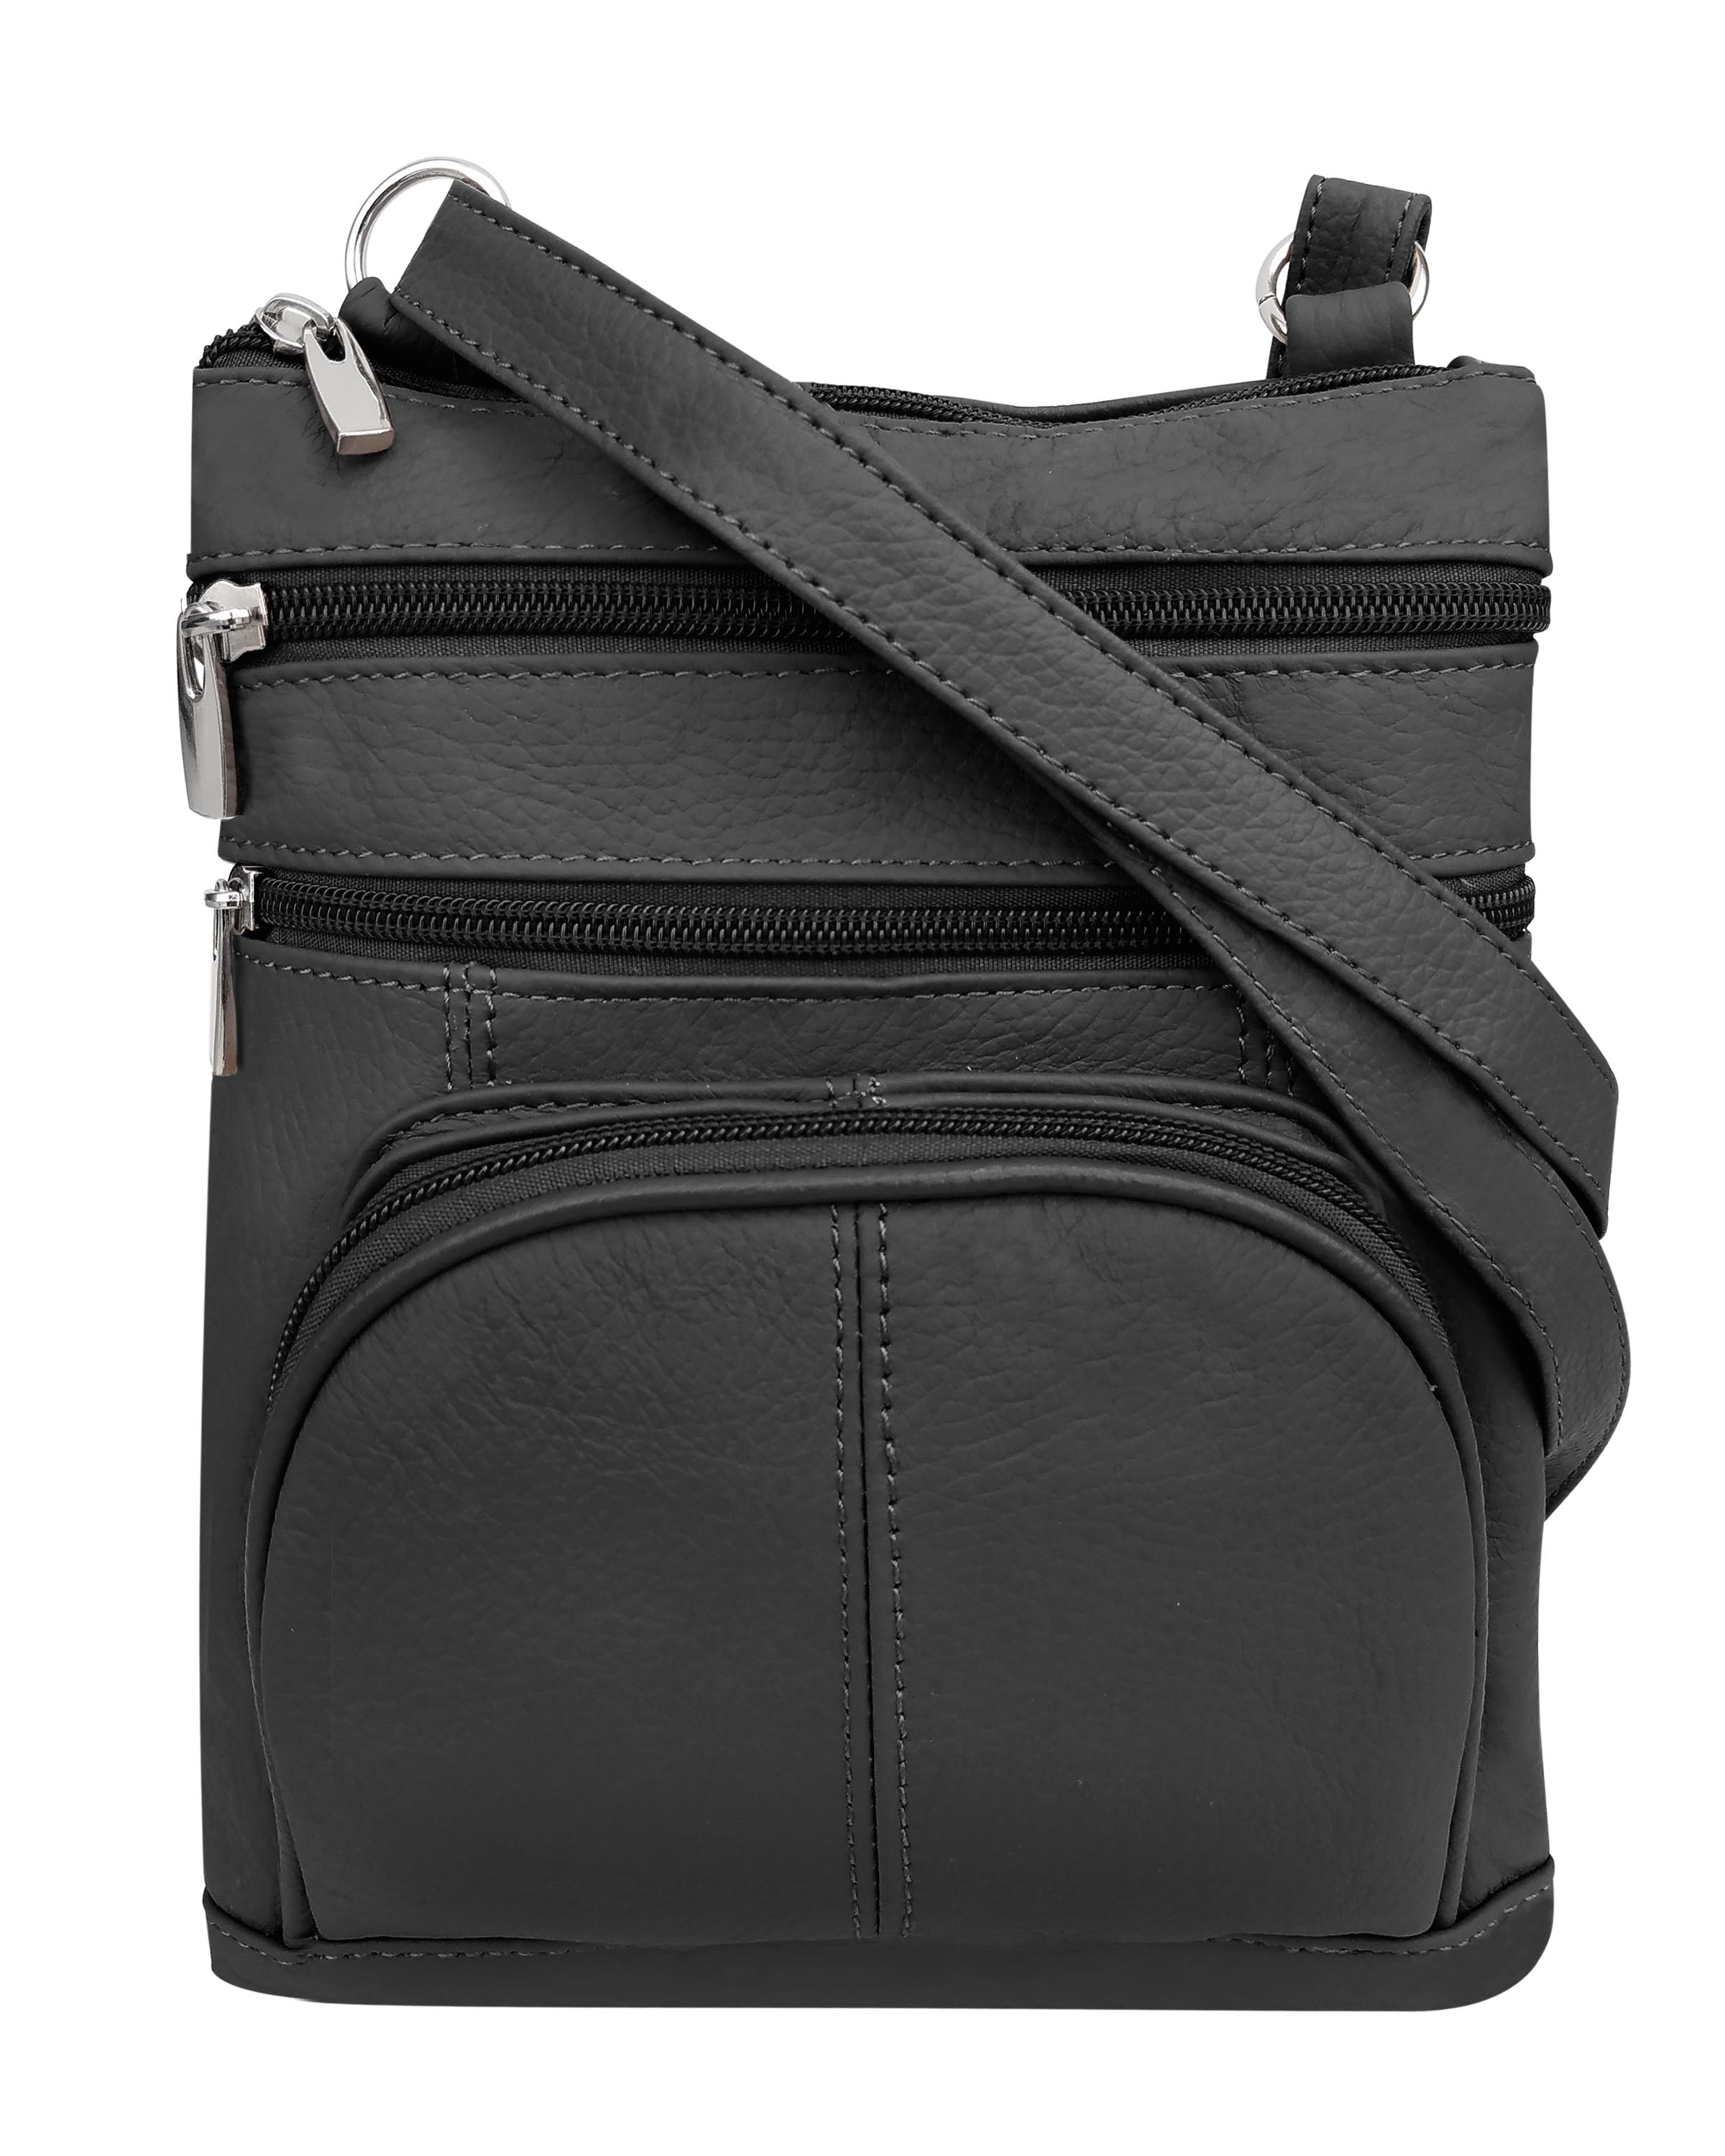 JAMIE Leather Crossbody Multi-Pocket Purse Bag with Front Organization ...